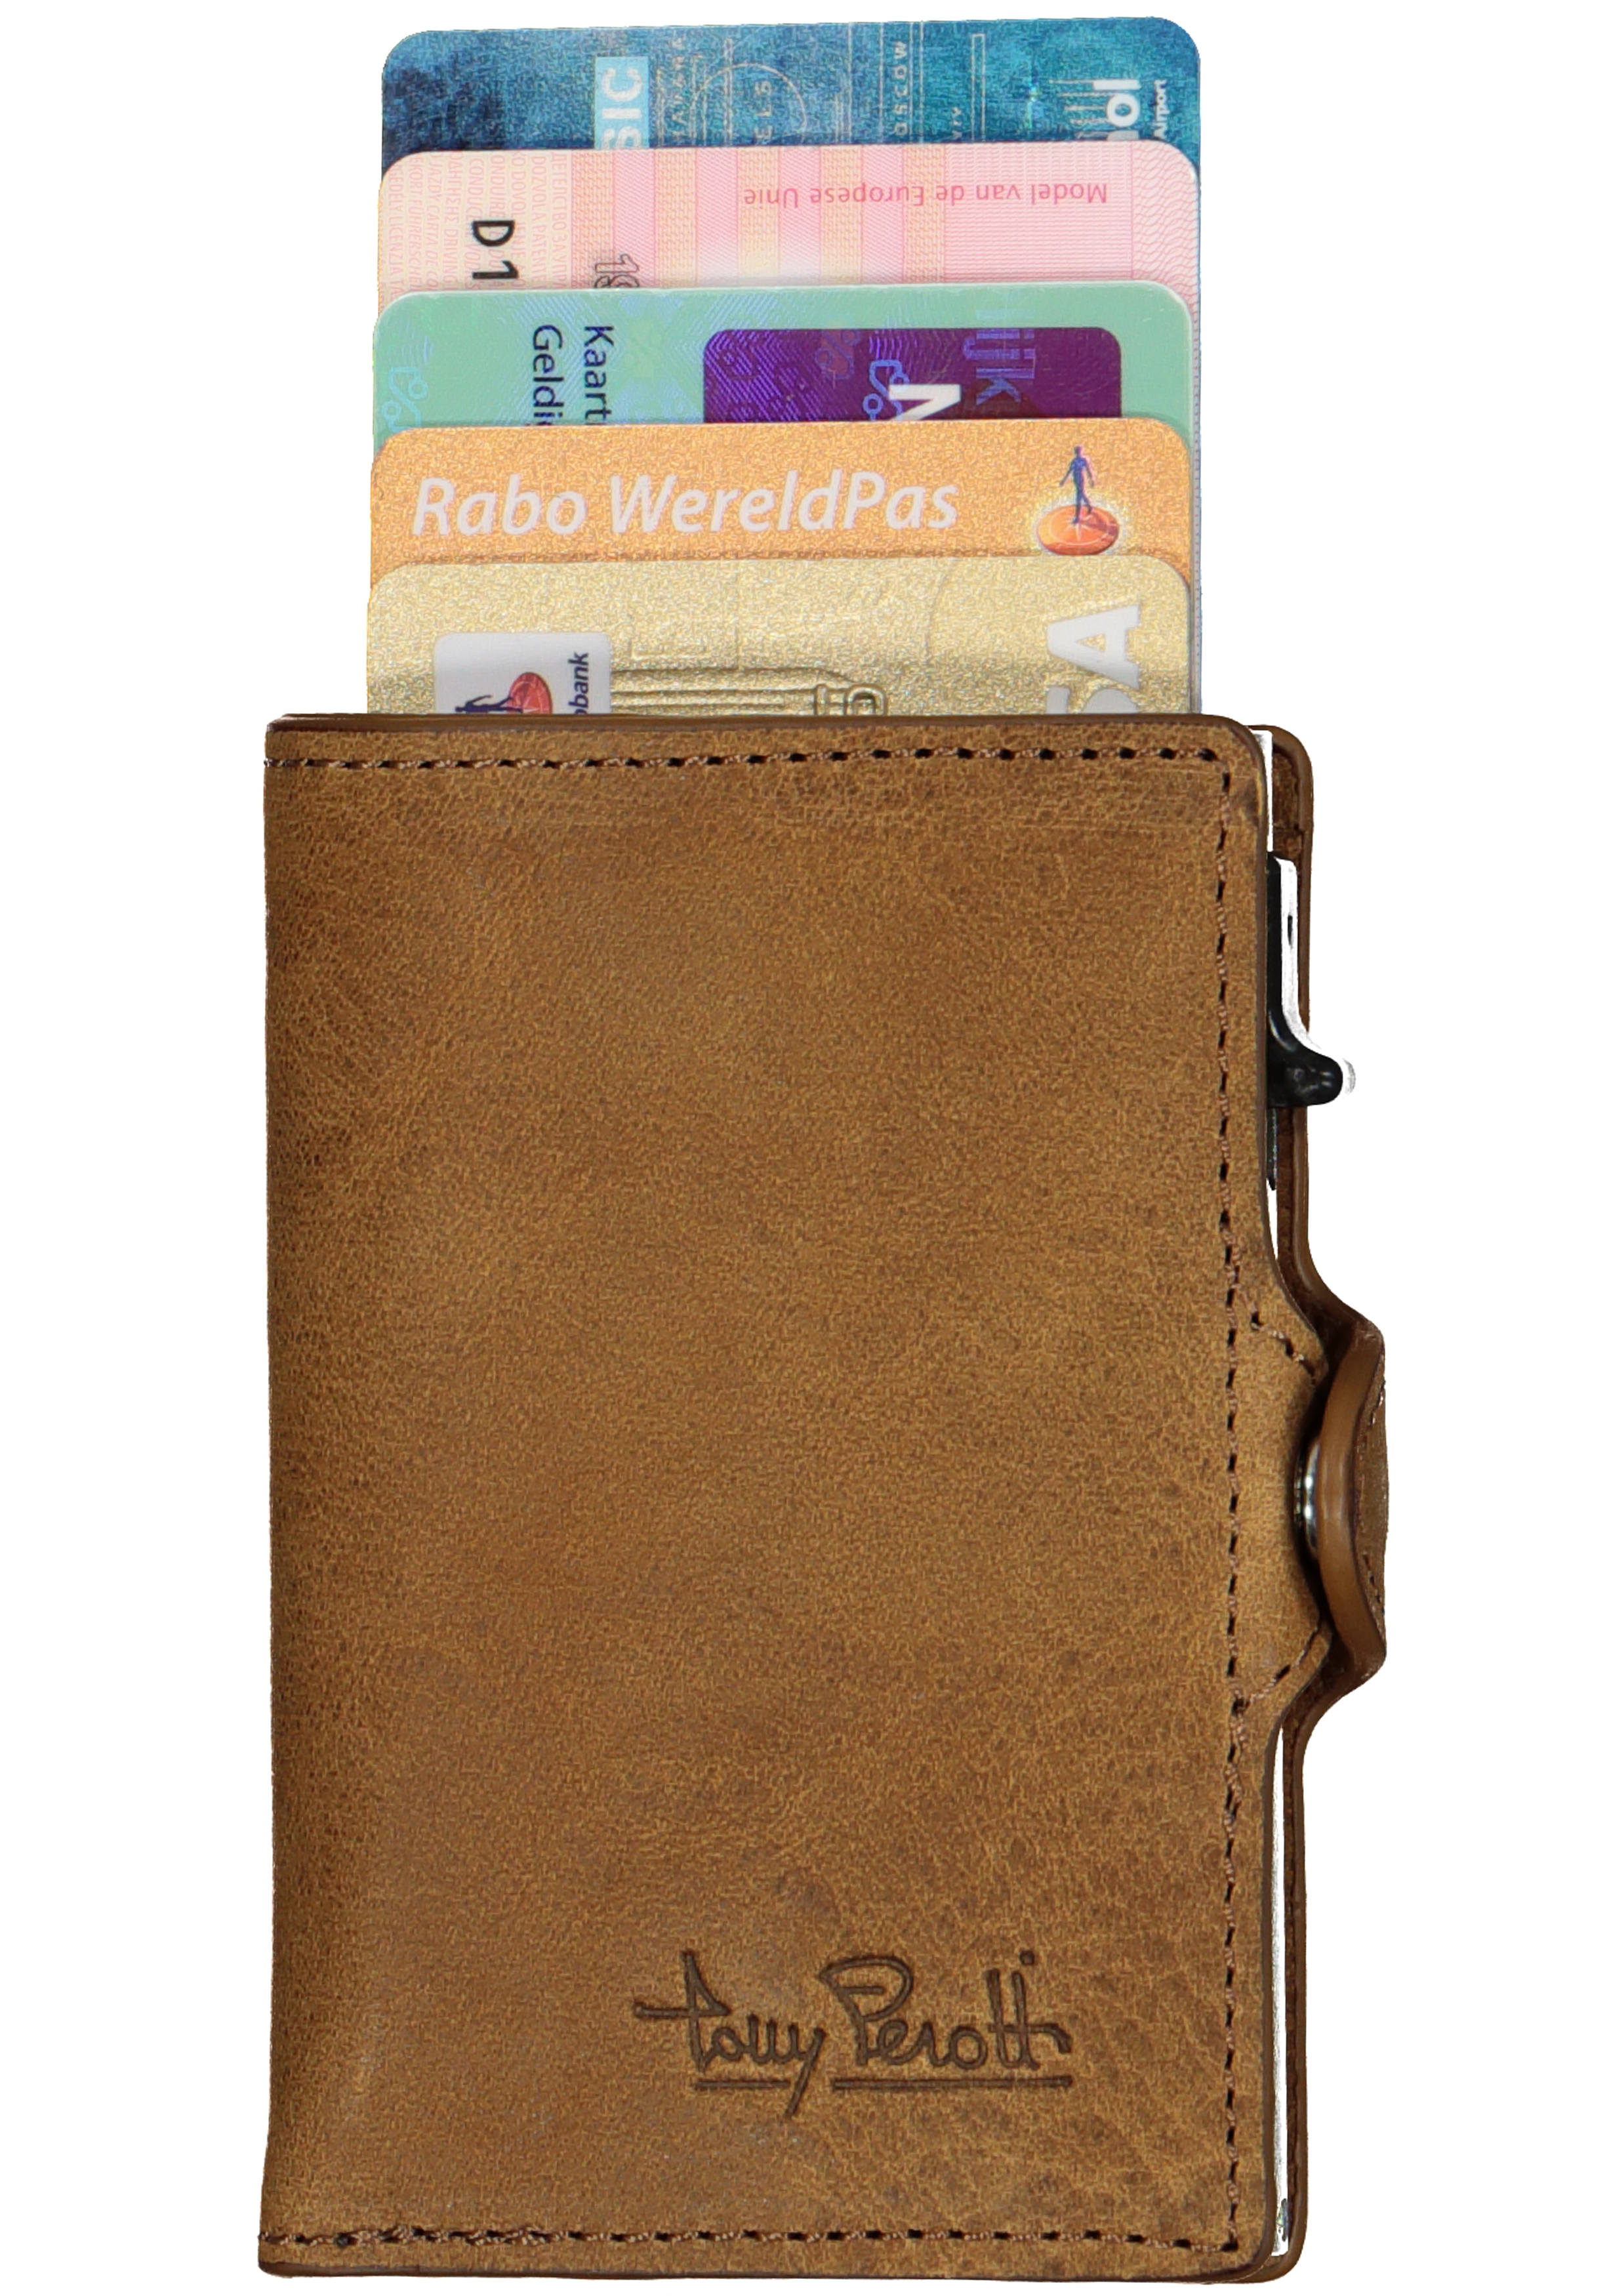 Ongemak As barsten Tony Perotti pasjes RFID portemonnee (6 pasjes) met papiergeldvak, bruin...  - Zomer SALE tot 50% korting